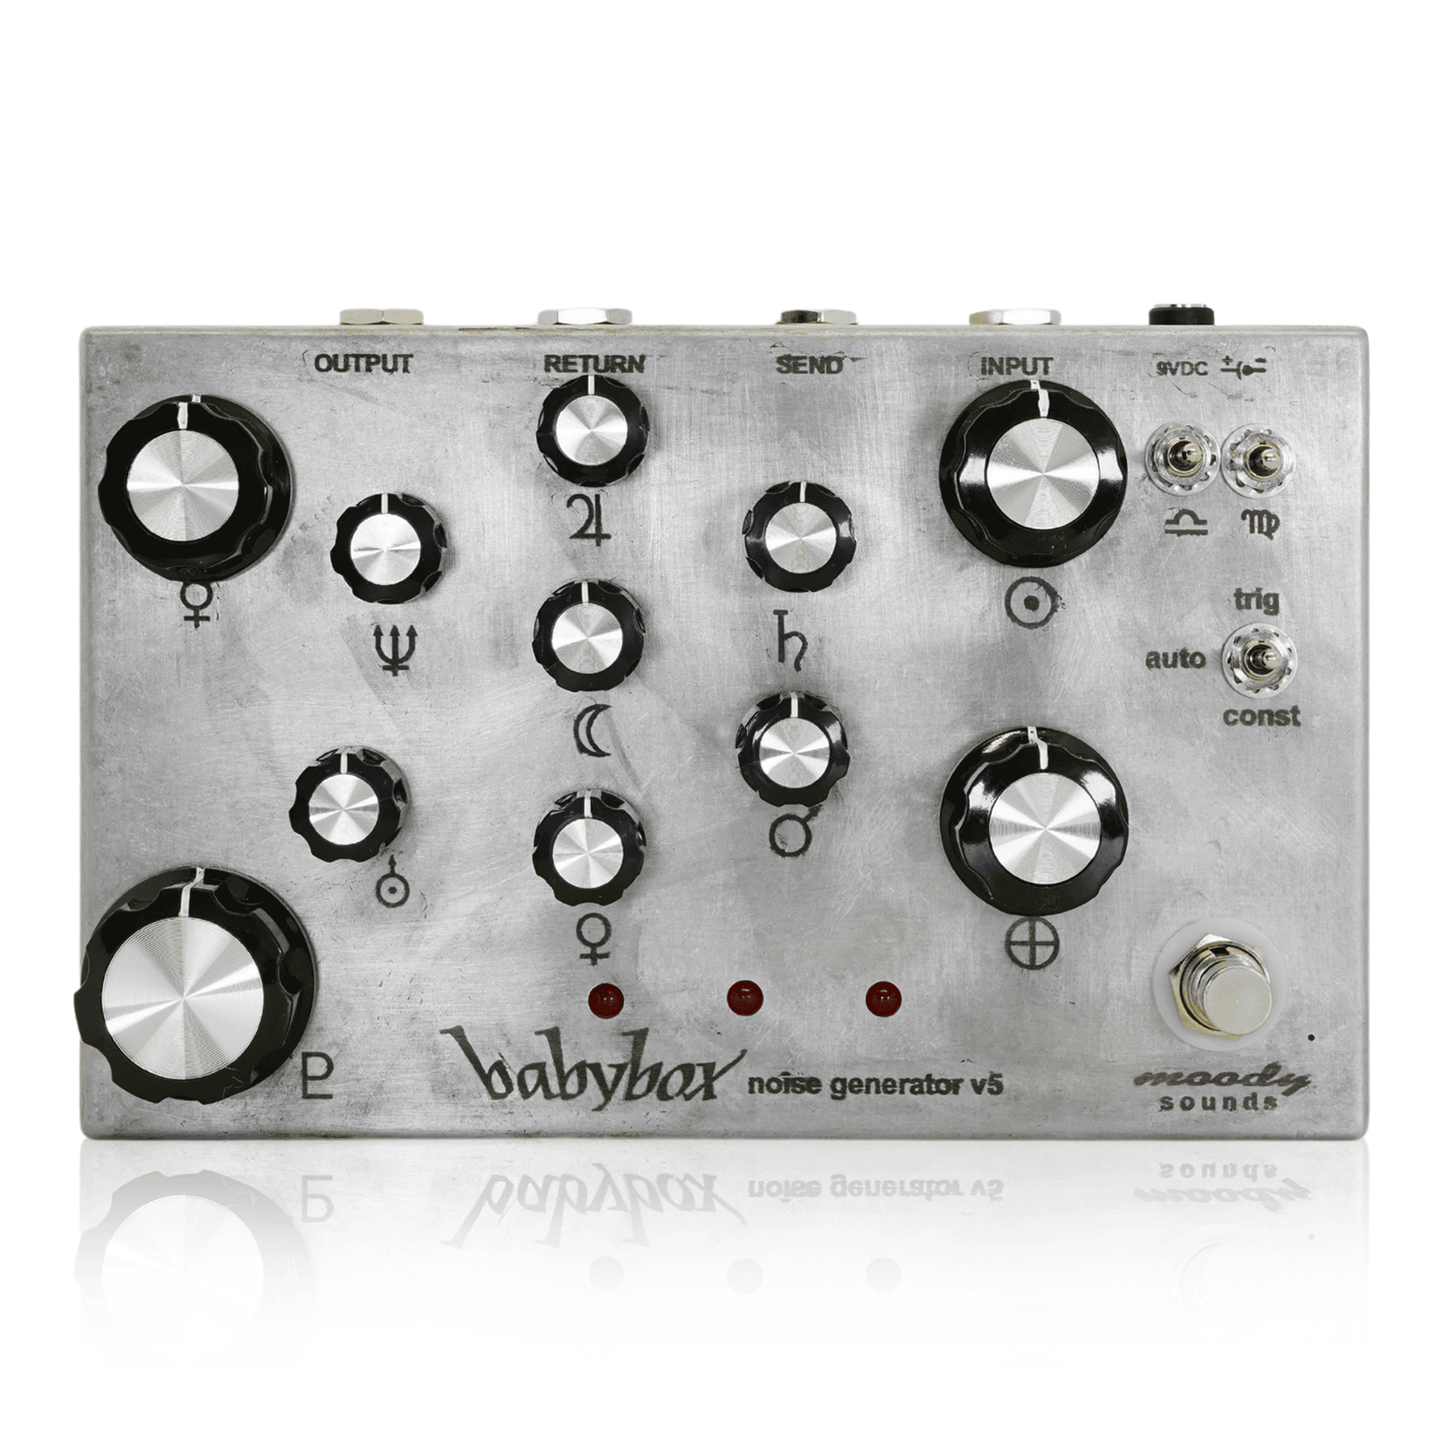 Moody Sounds/Baby Box Noise Generator V5